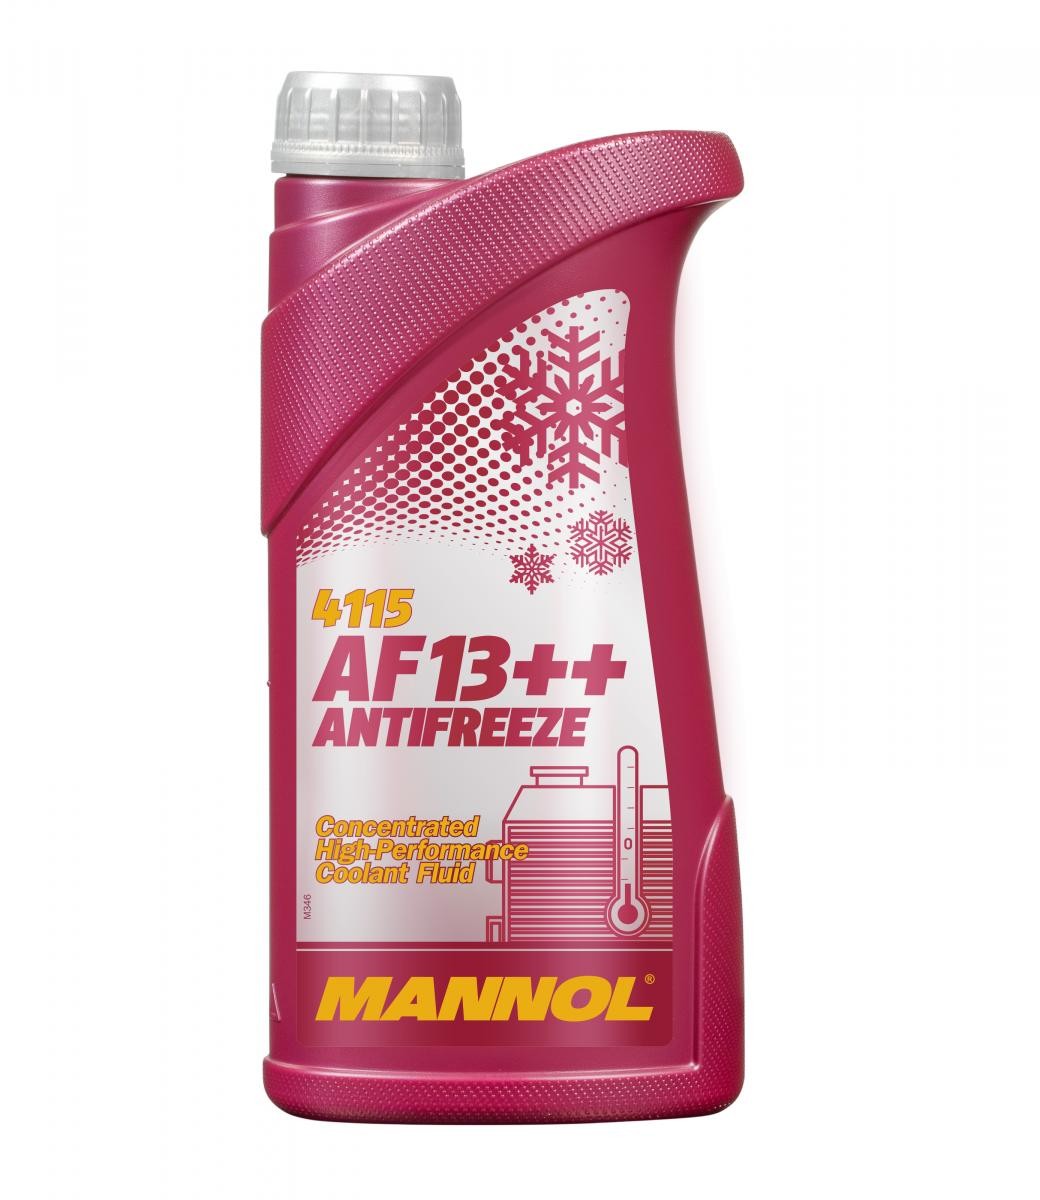 TRIUMPH STREET Kühlmittel G12 Rot, 1l, -38(50/50) MANNOL AF13++, High-performance MN4115-1